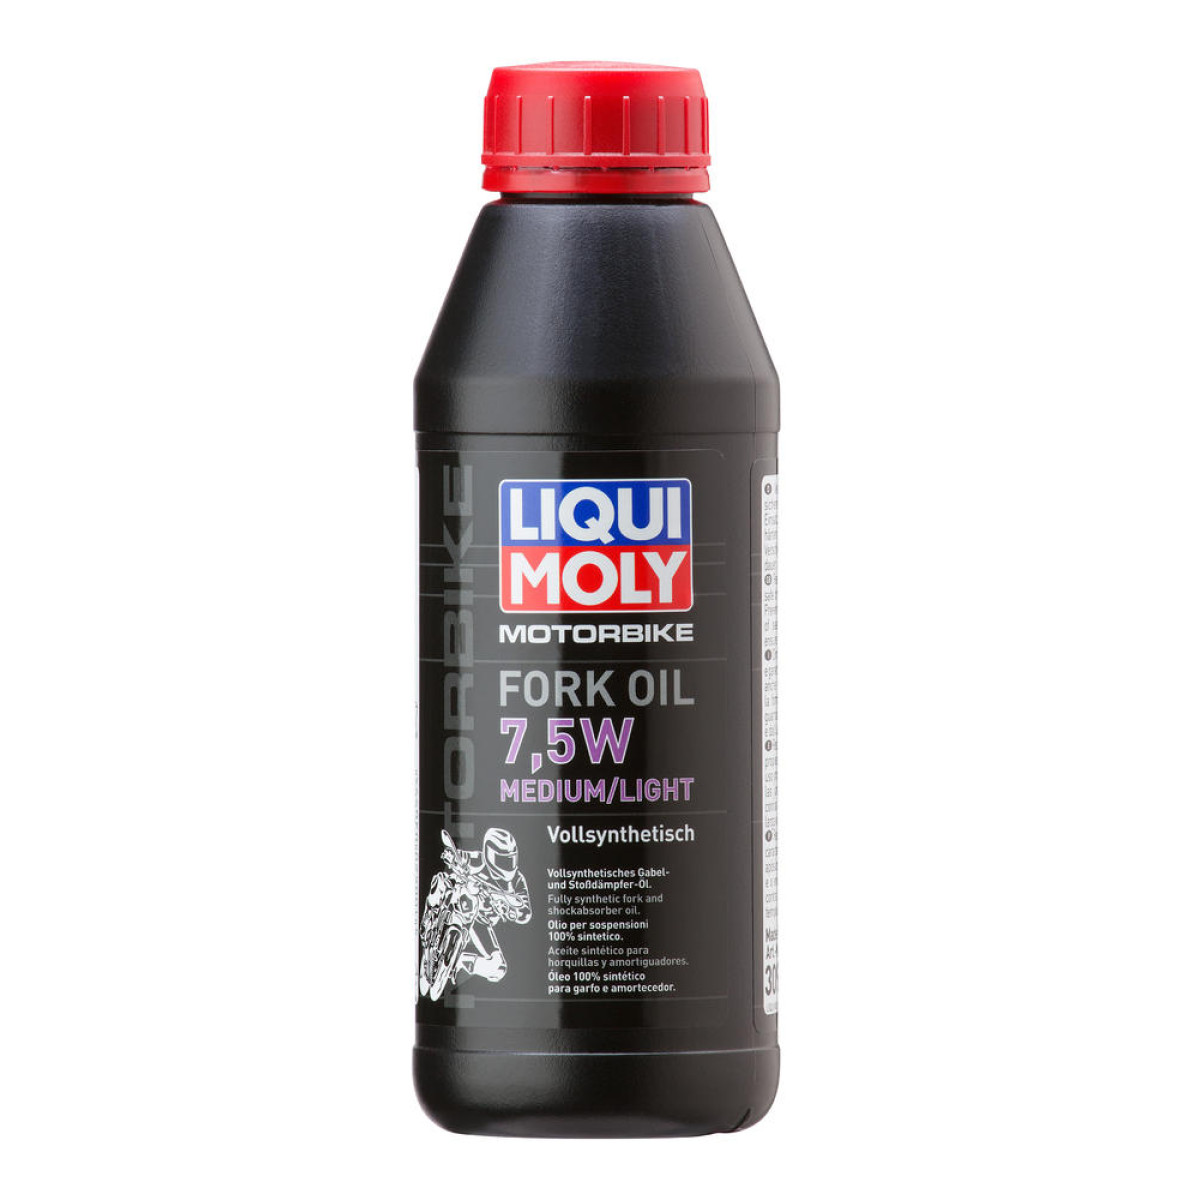 Liqui Moly Gear Öl  Medium/Light, 7.5W, 500 ml